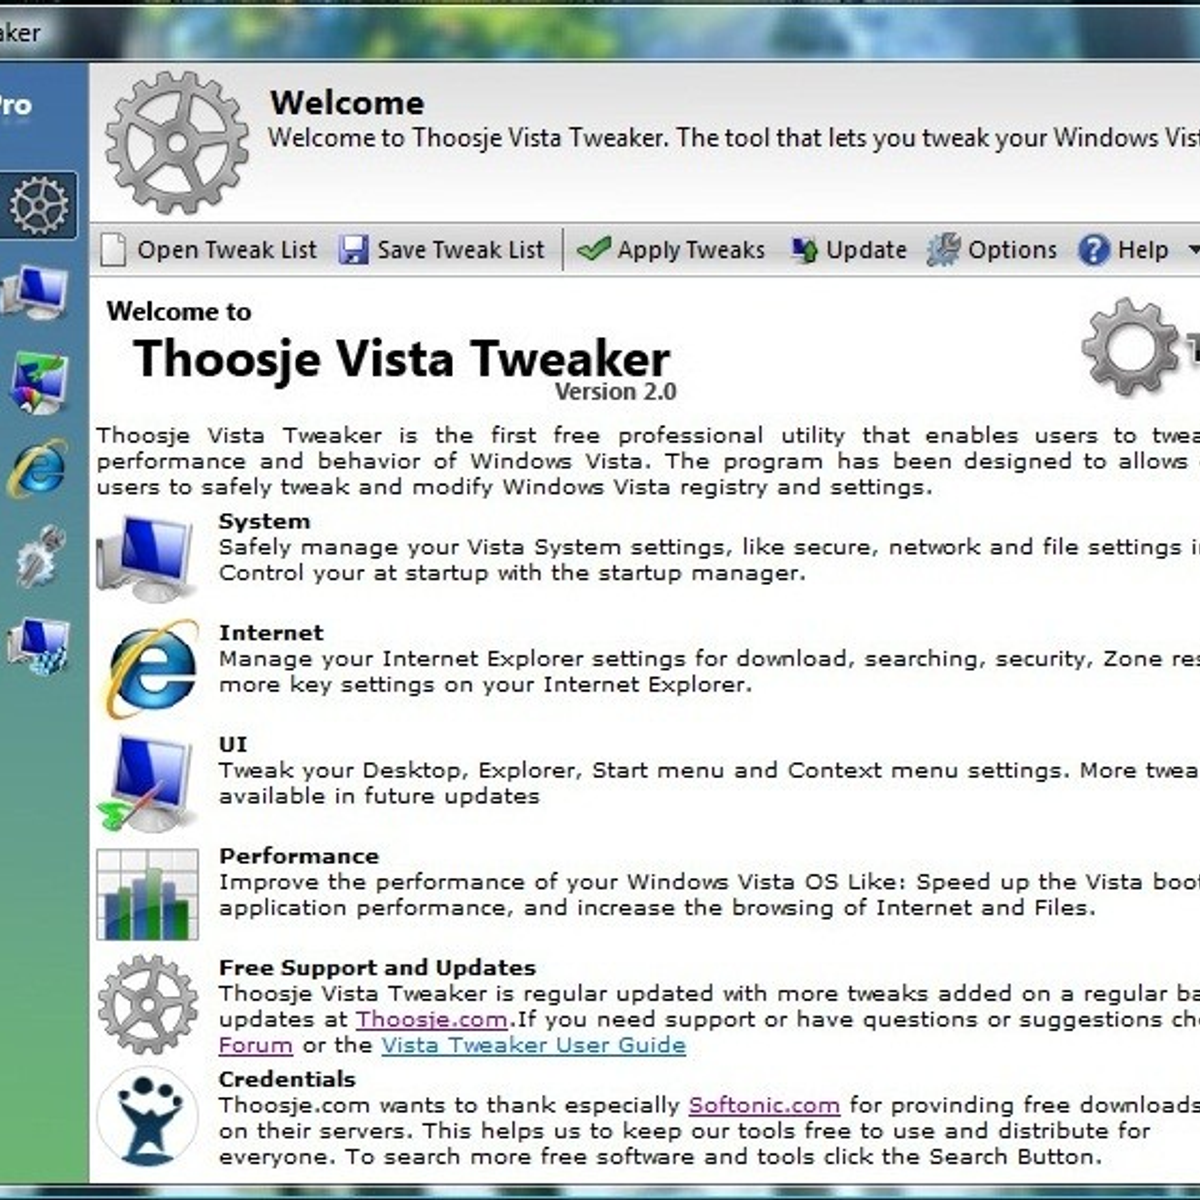 Wot tweaker. Windows Vista твикер. Оптимизацыя виндовс трики ресстра. Vista Tweaker 0.2. Neo Tweaker professional 2.11.